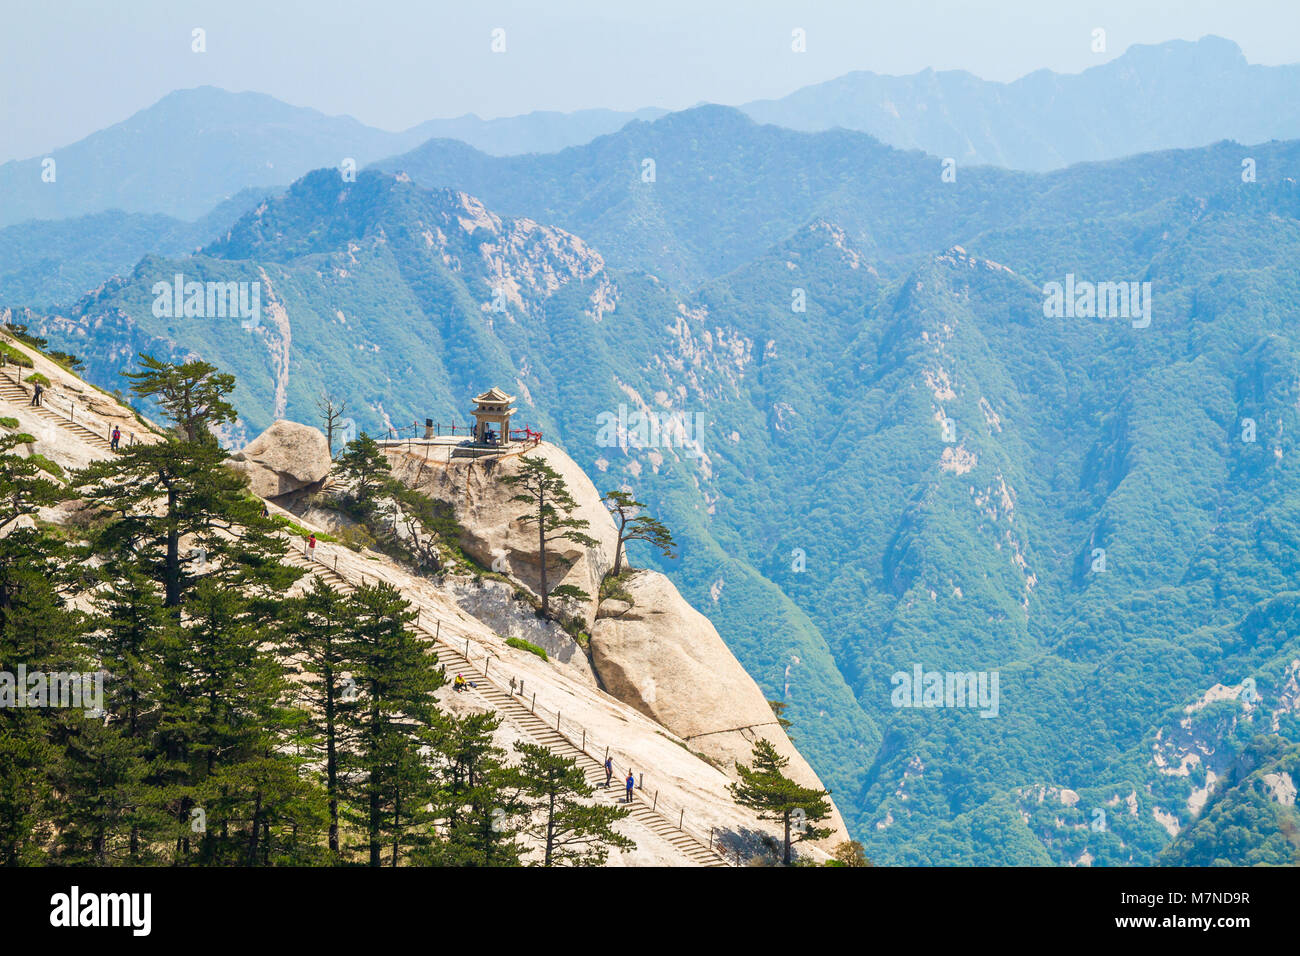 China, Provinz Shaanxi, Huashan Berg, Pavillon auf dem Berg Stockfoto